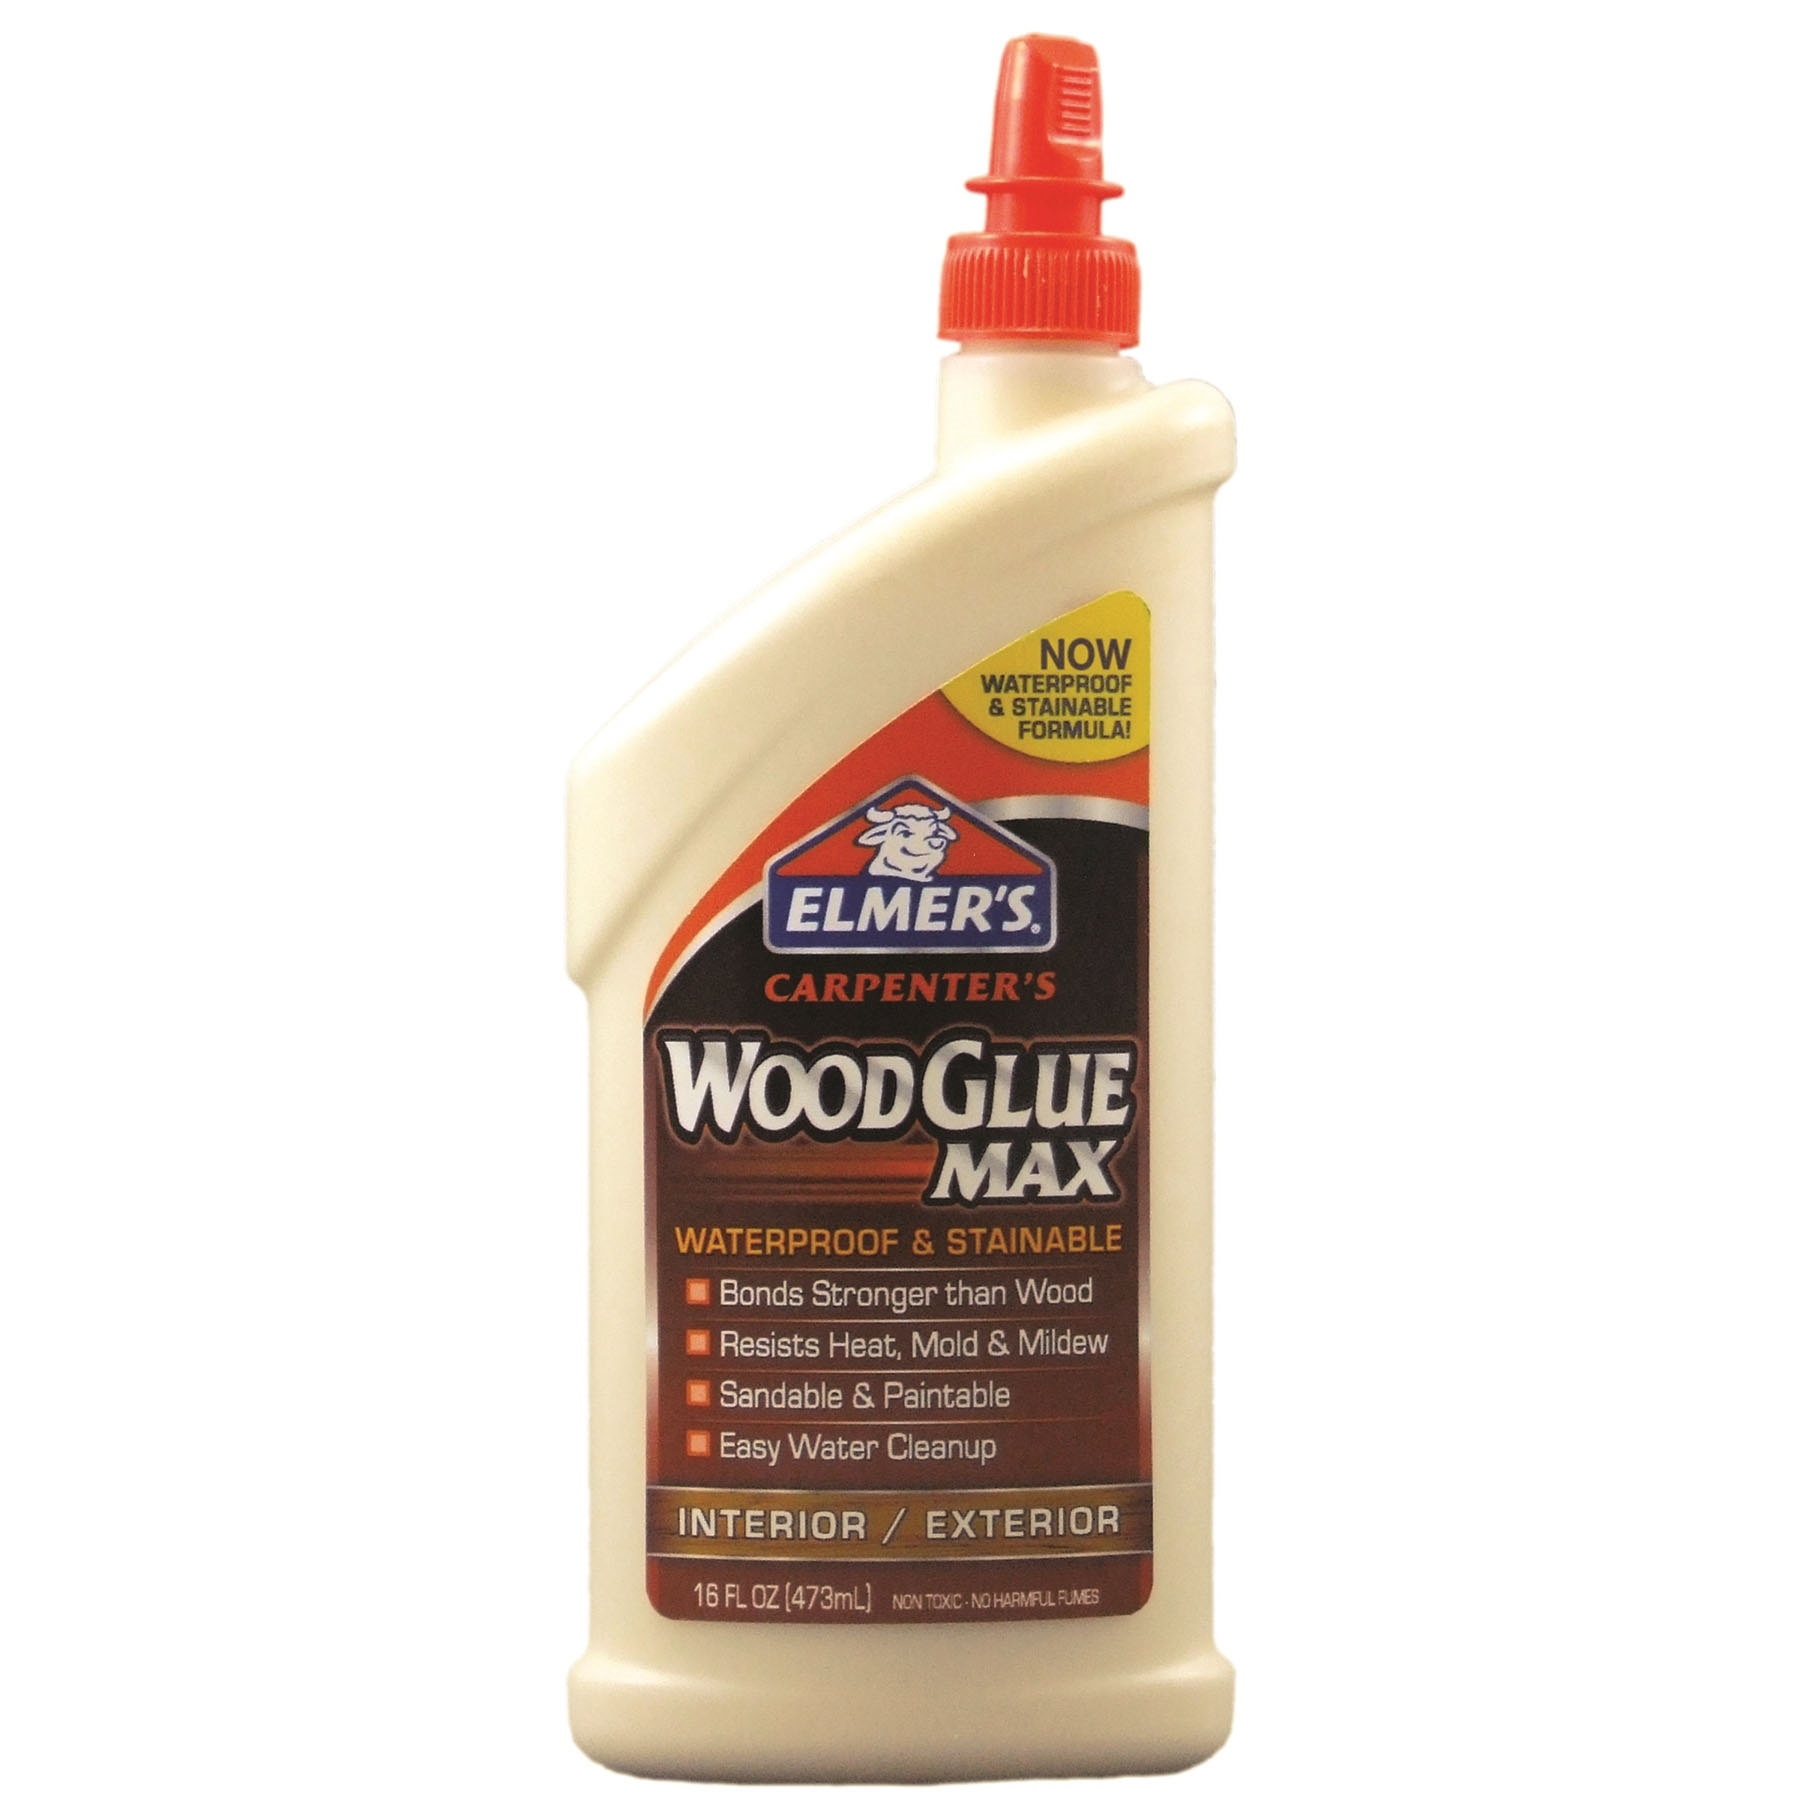 Elmers Carpenter's Max E7310 Wood Glue, 16 oz Bottle - Wilco Farm Stores